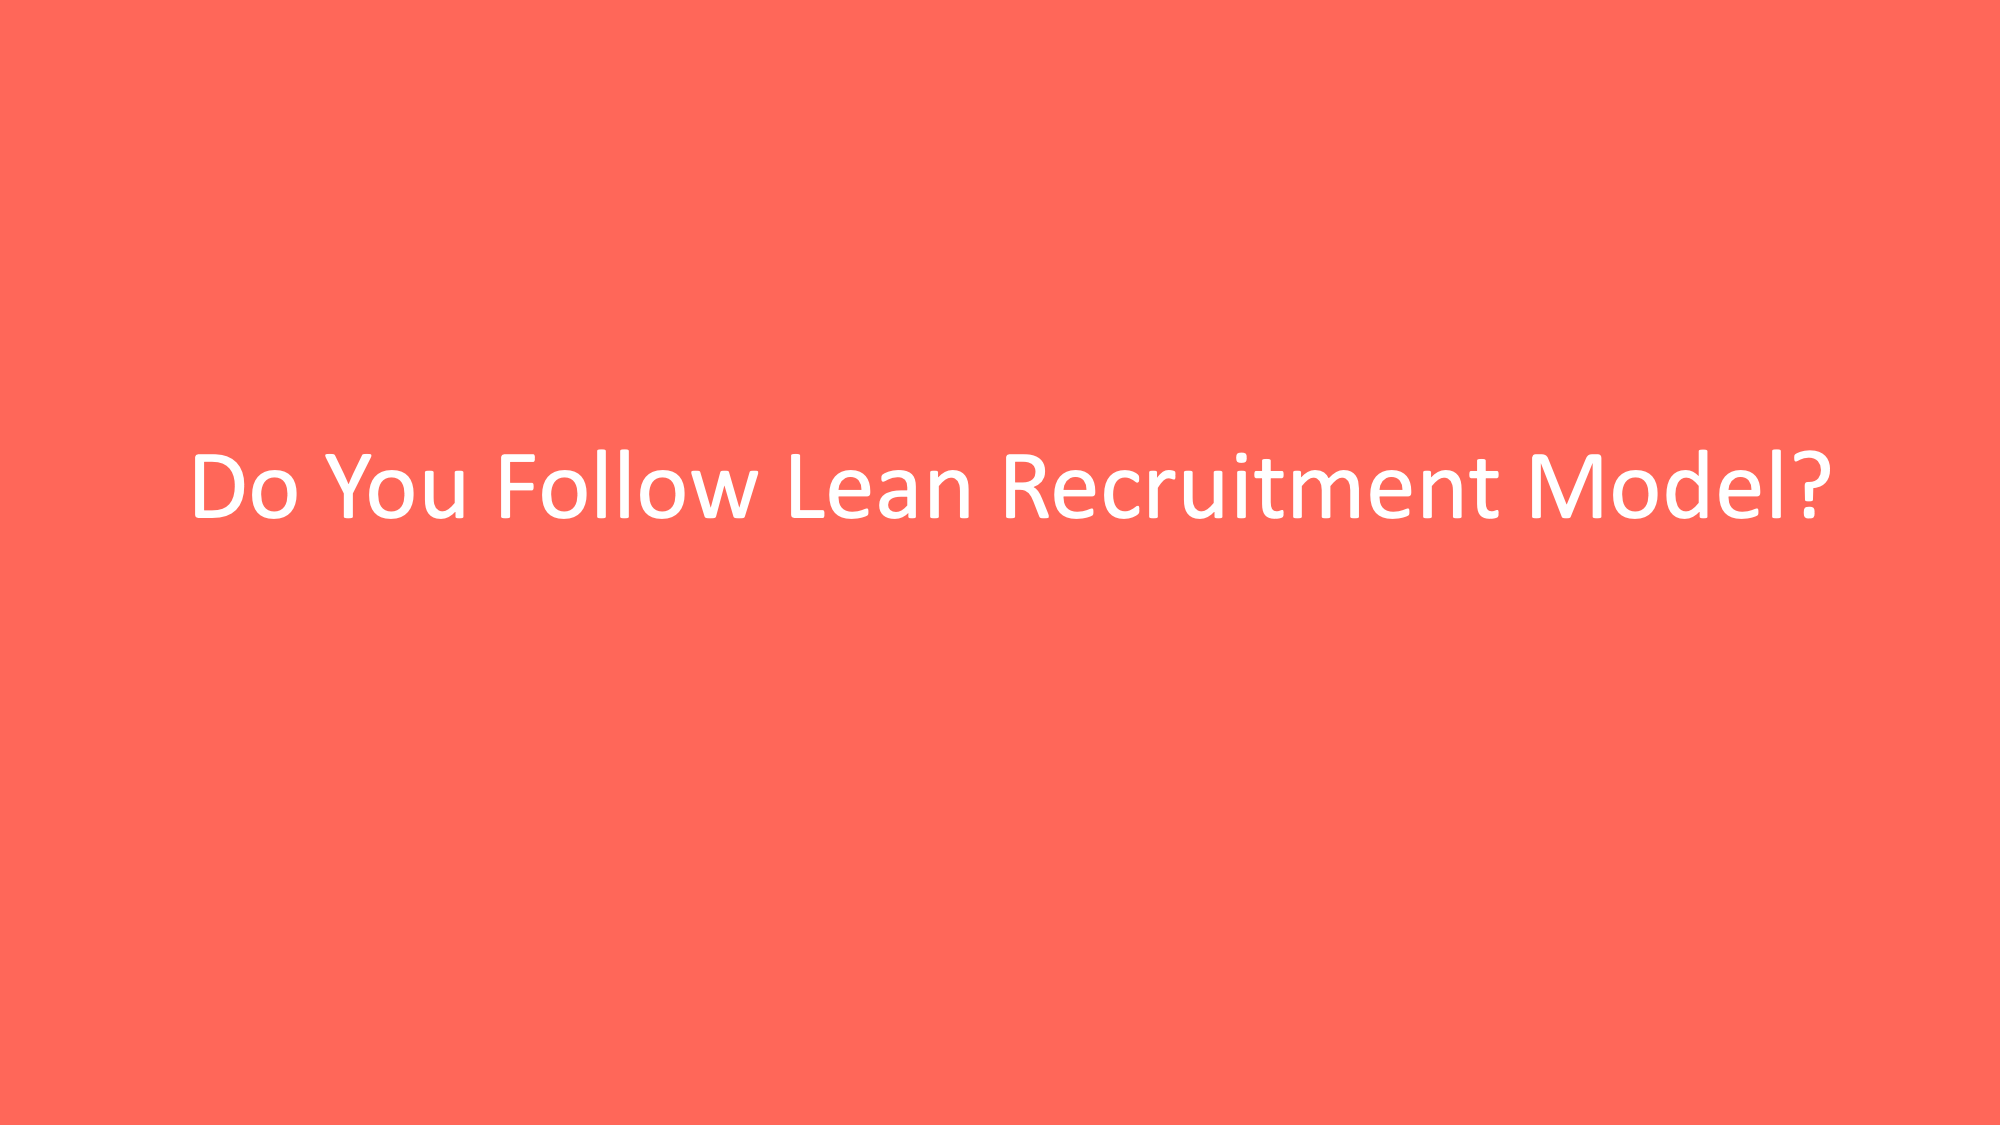 Lean Recruitment Model